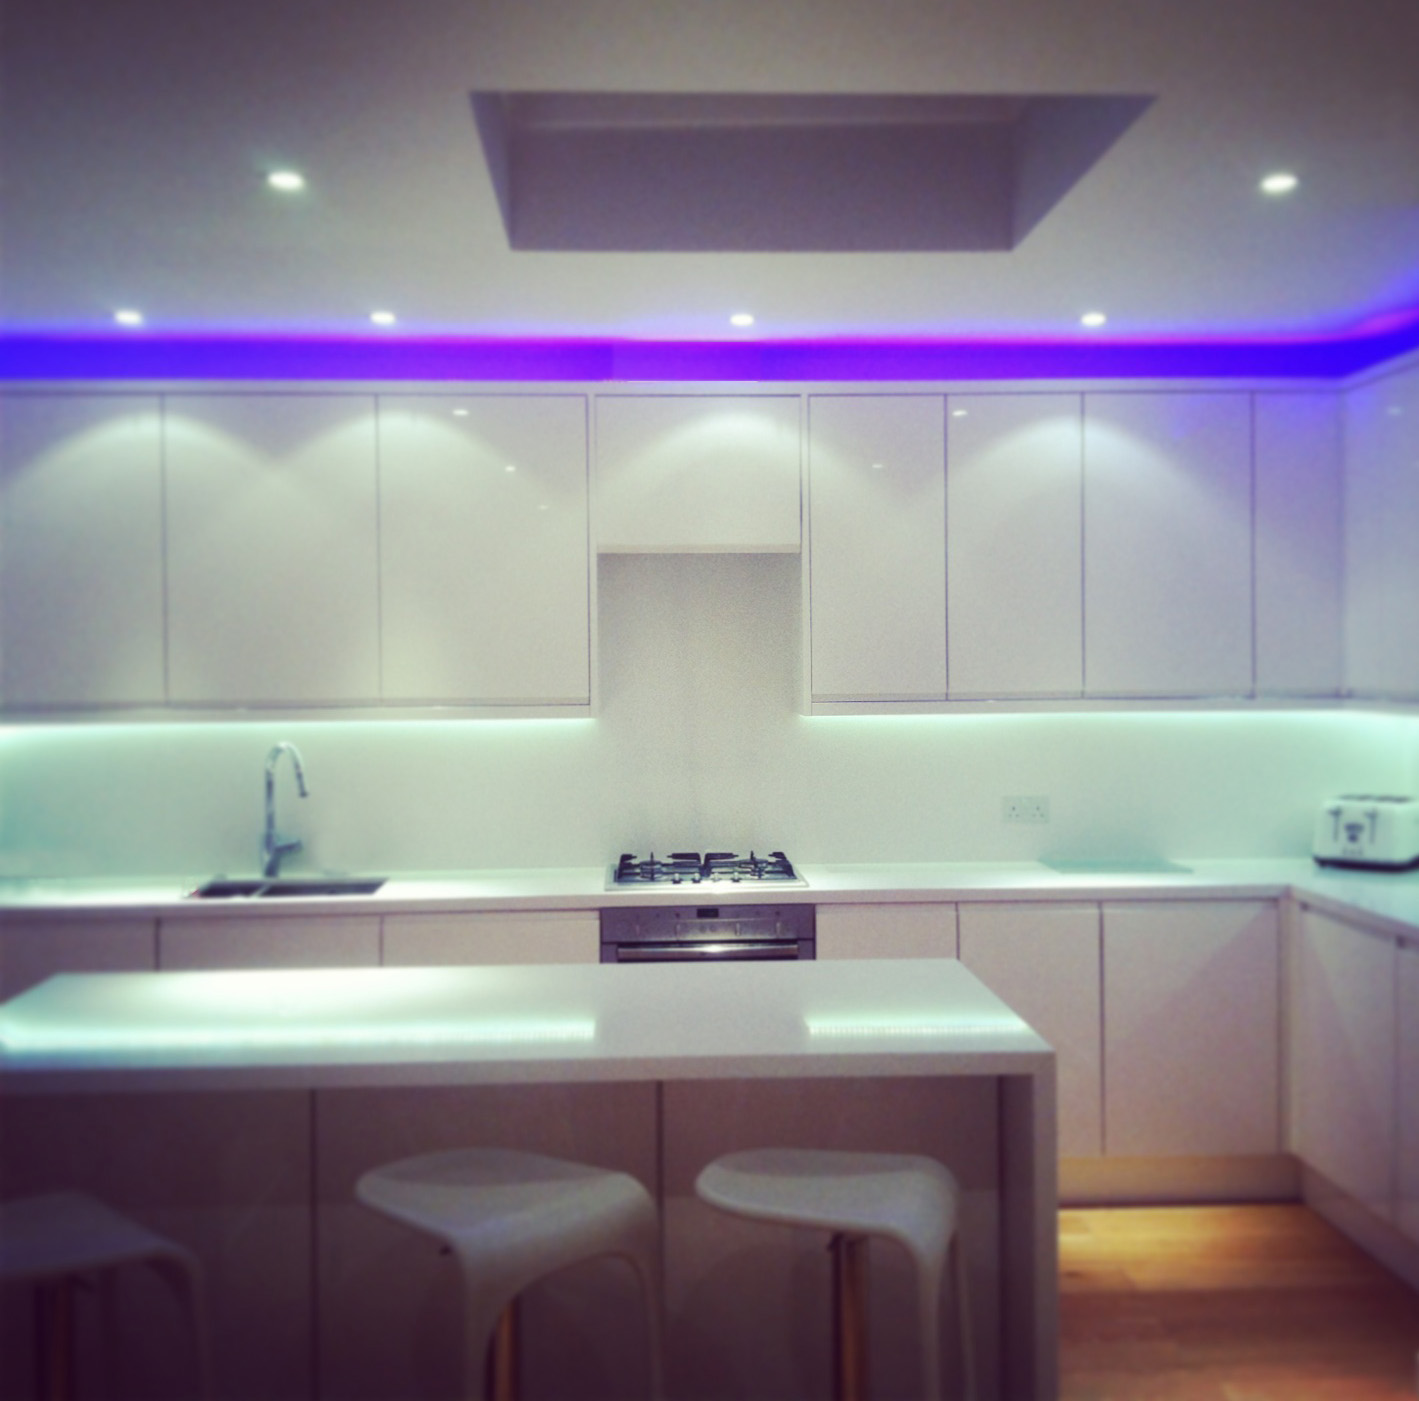 Led kitchen lighting best led lights kitchen ideas - best room decorating ideas - home design YRTBPOA